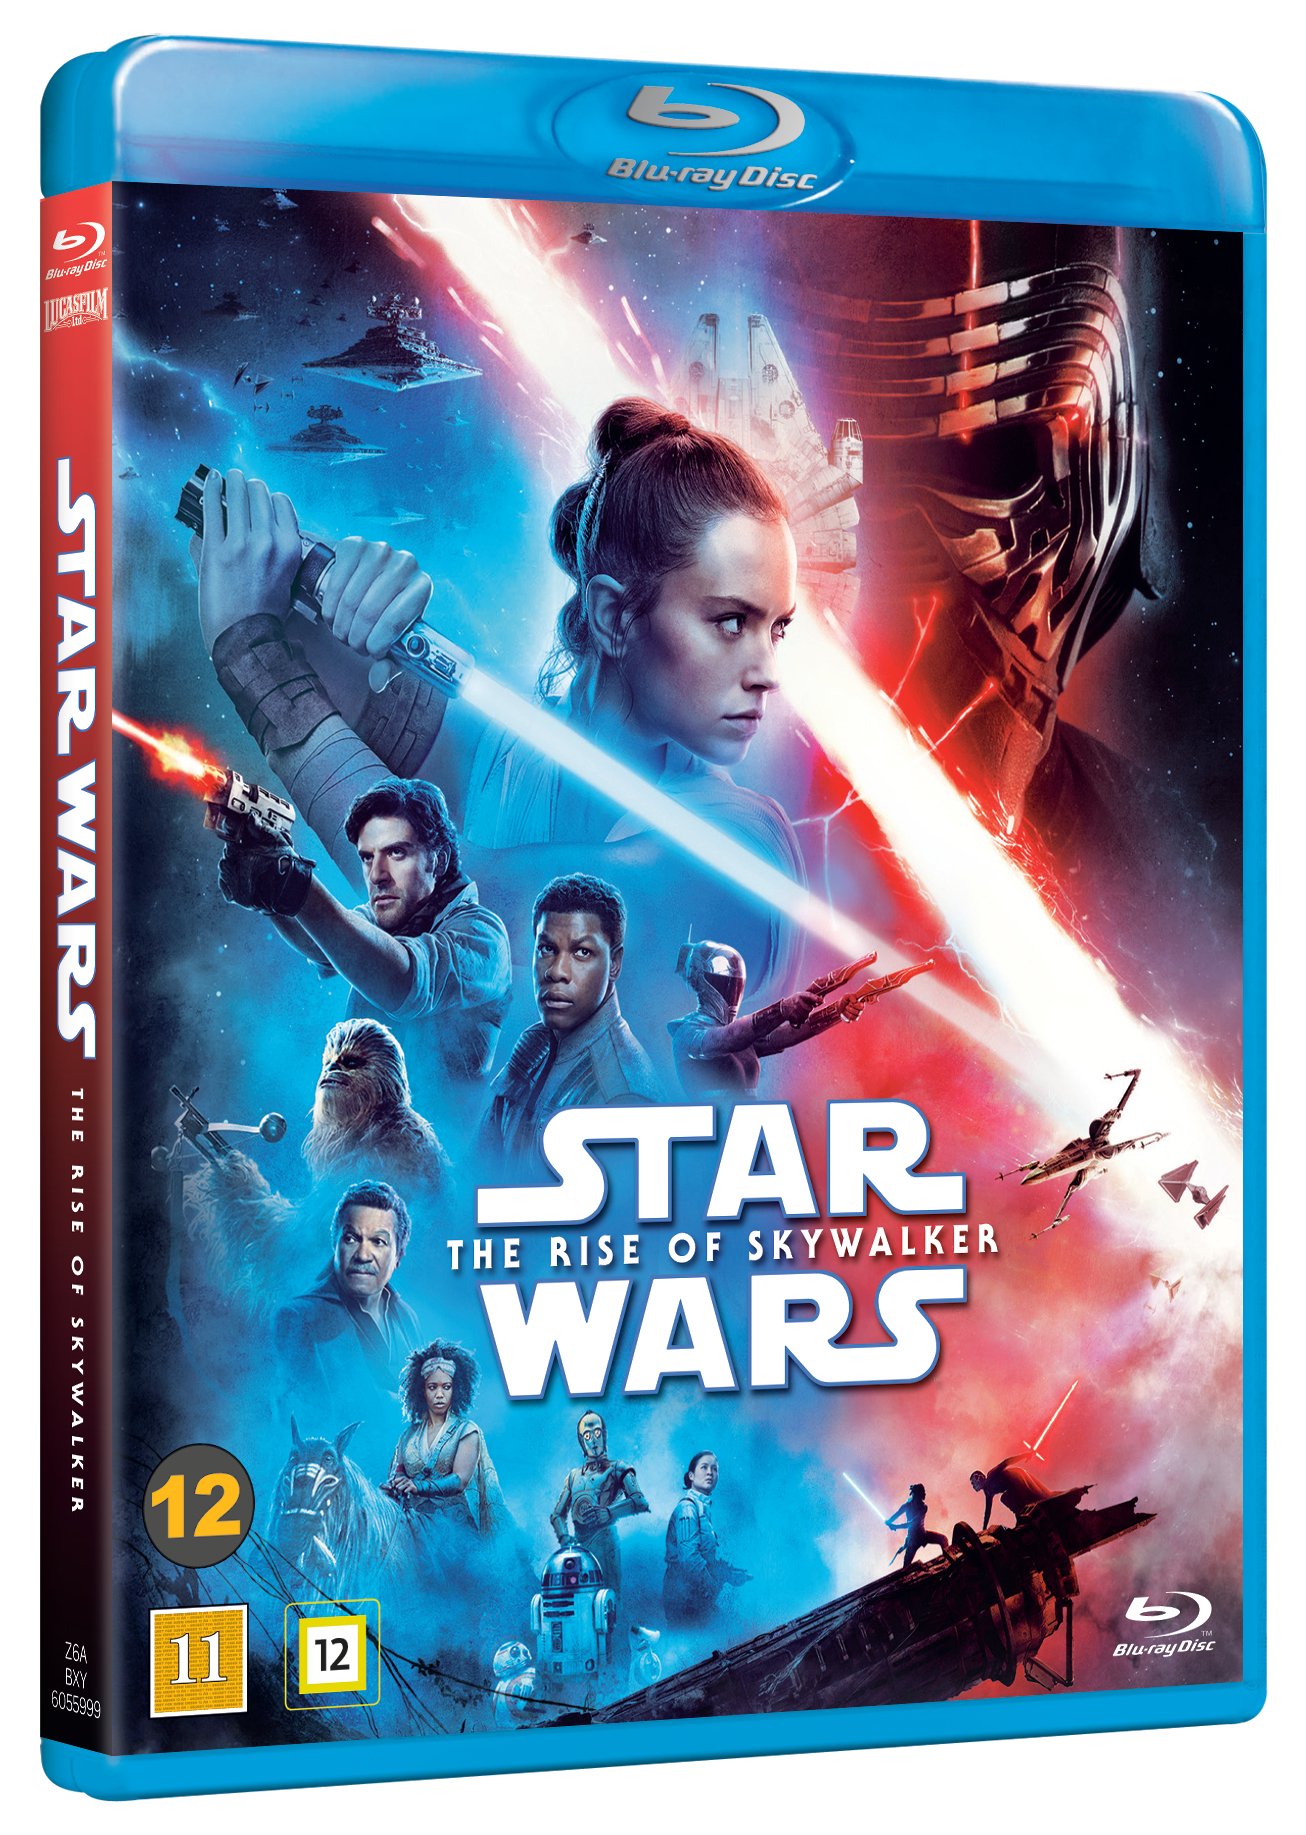 Star Wars: The Rise of Skywalker free downloads